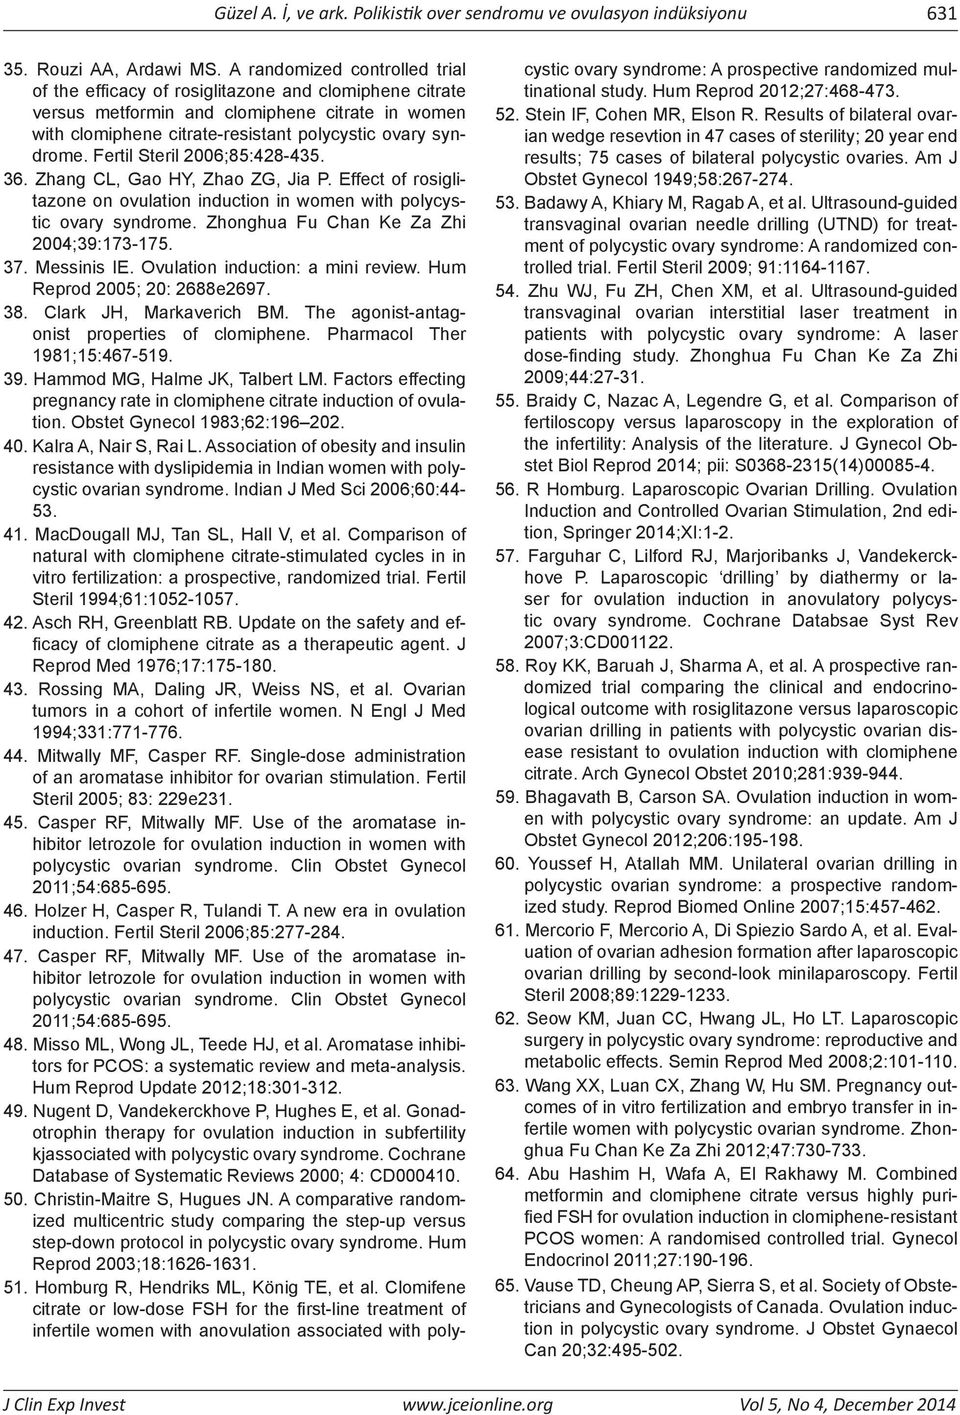 Fertil Steril 2006;85:428-435. 36. Zhang CL, Gao HY, Zhao ZG, Jia P. Effect of rosiglitazone on ovulation induction in women with polycystic ovary syndrome. Zhonghua Fu Chan Ke Za Zhi 2004;39:173-175.